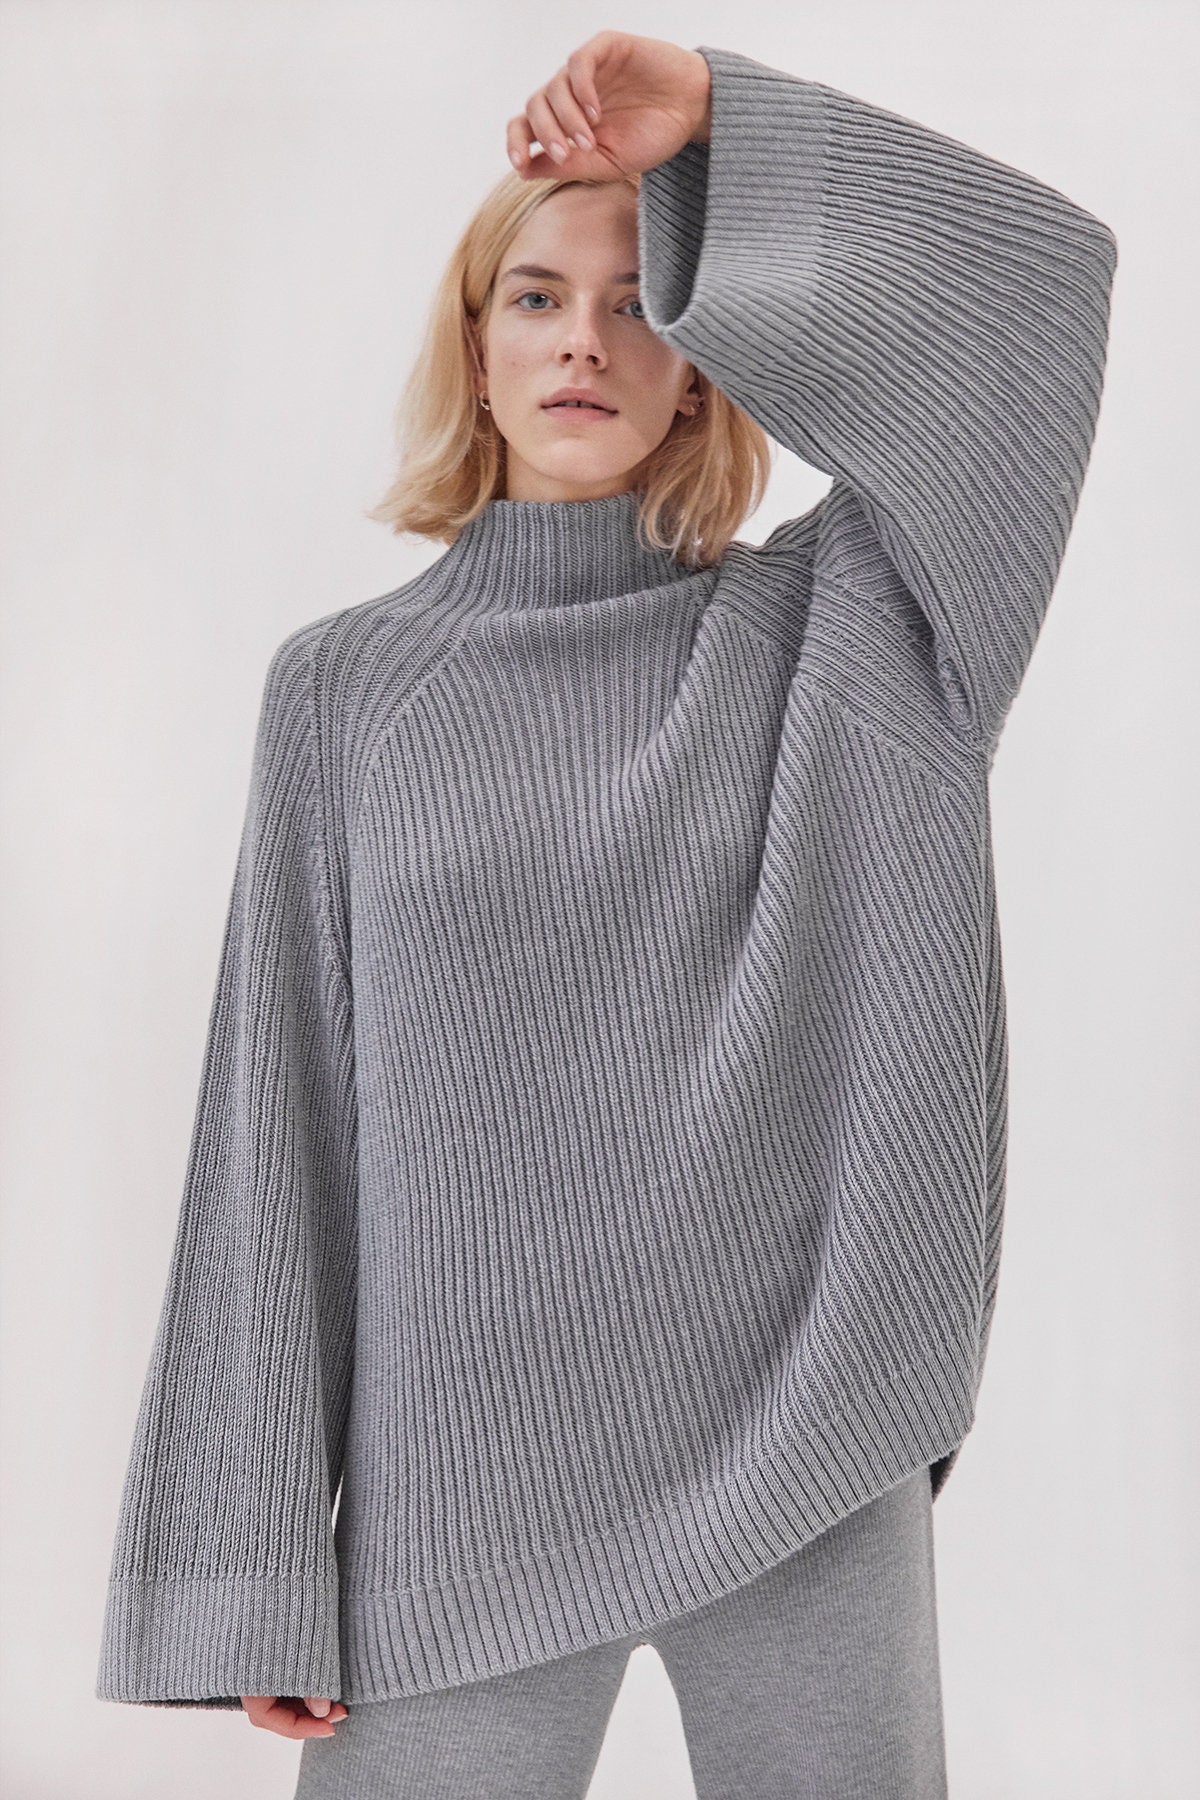 Knitted Merino Wool Loungewear Set Women / Two Piece Set of | Etsy